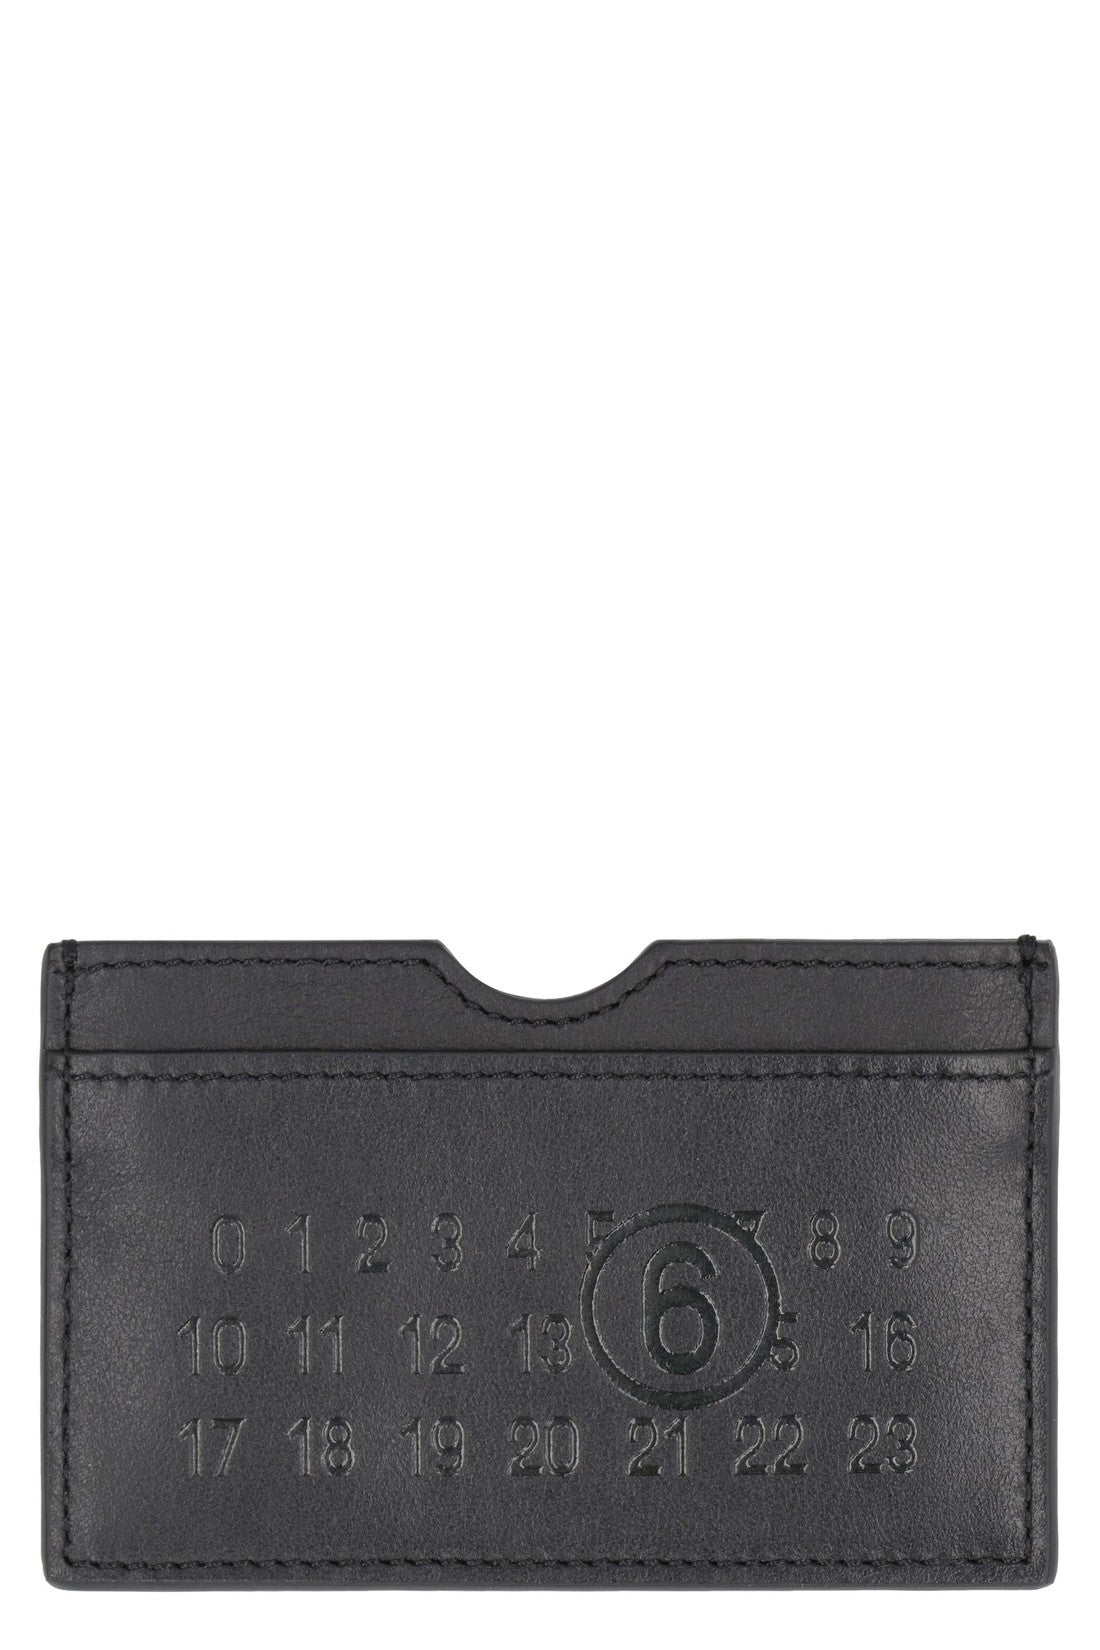 MM6 Maison Margiela-OUTLET-SALE-Leather card holder-ARCHIVIST